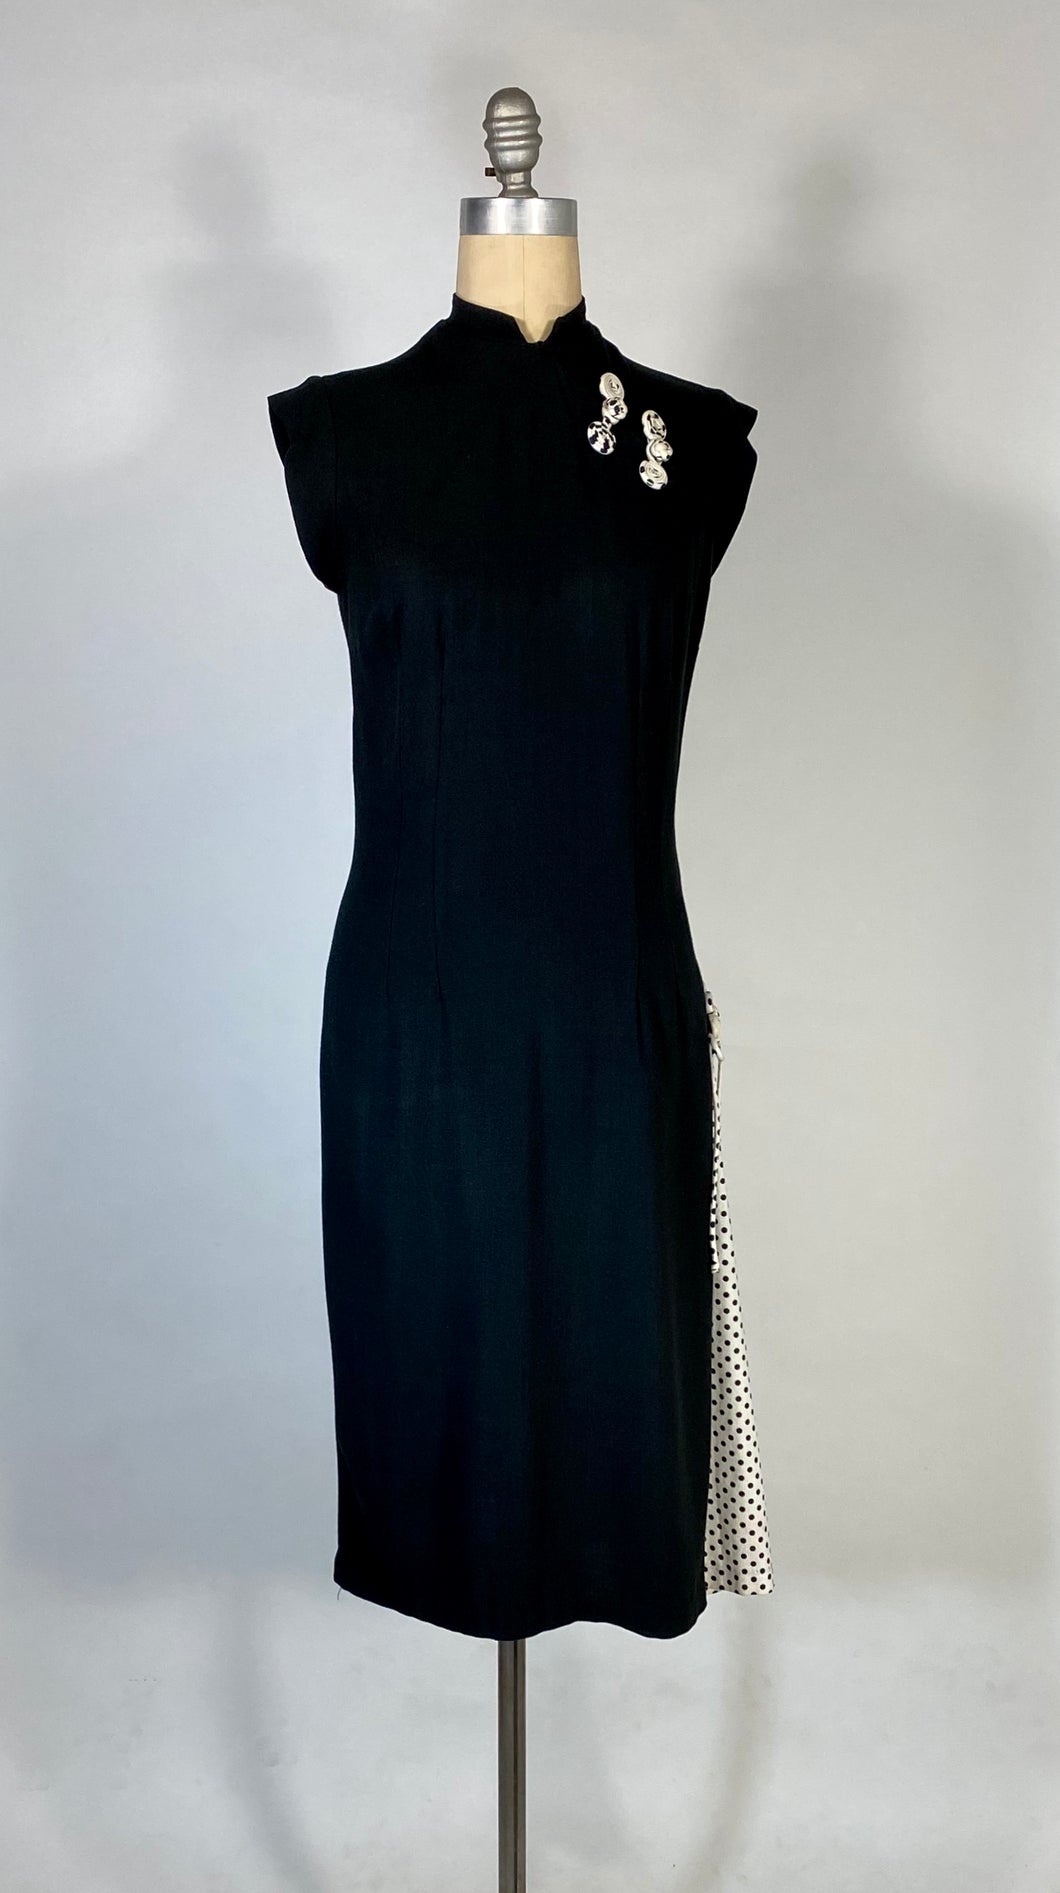 1960’s black rayon blend cheongsam Qi Pao style dress with peek-a-boo polka dot details